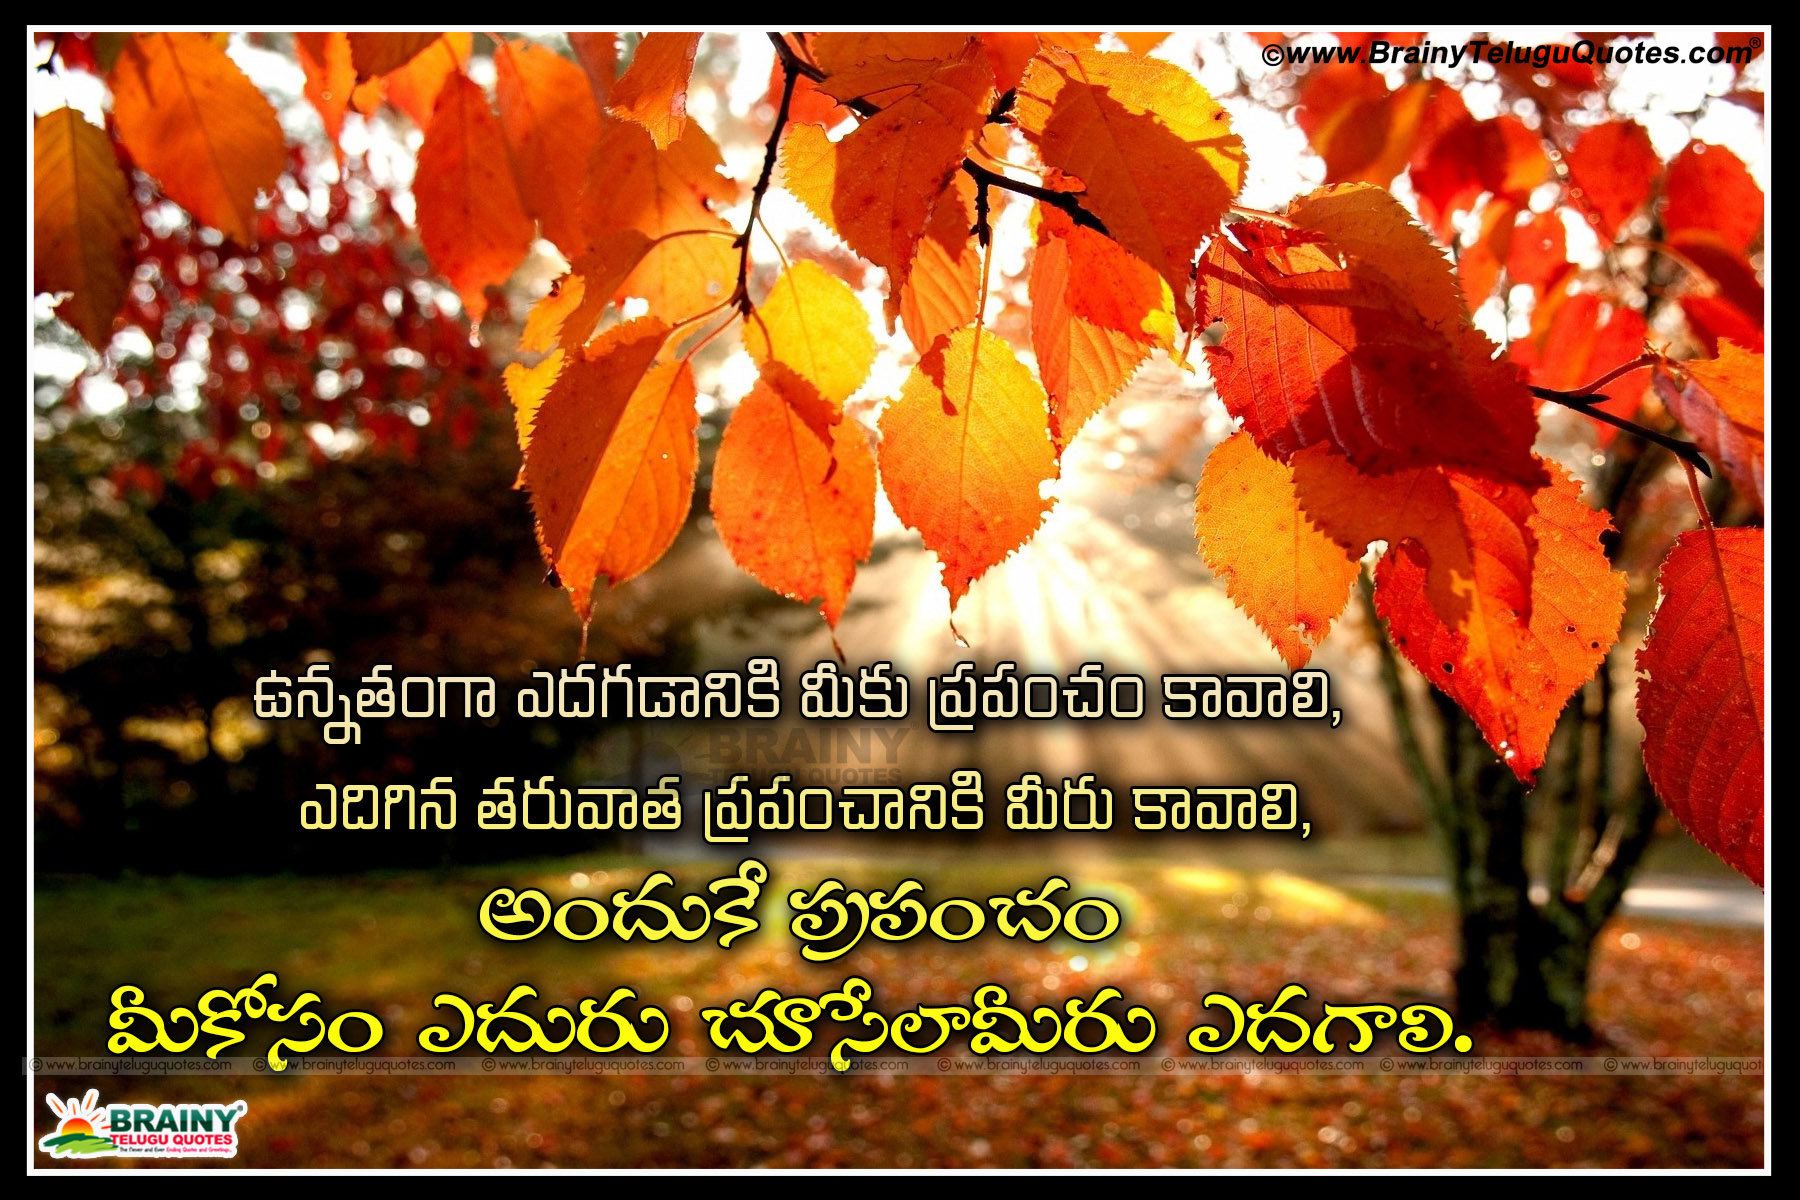 Telugu inspirational quotes,inspirational messages in elugu,inspirational sms,inspirational stories in telugu,inspirational life changing quotes,inspirational heart touching telugu quotes